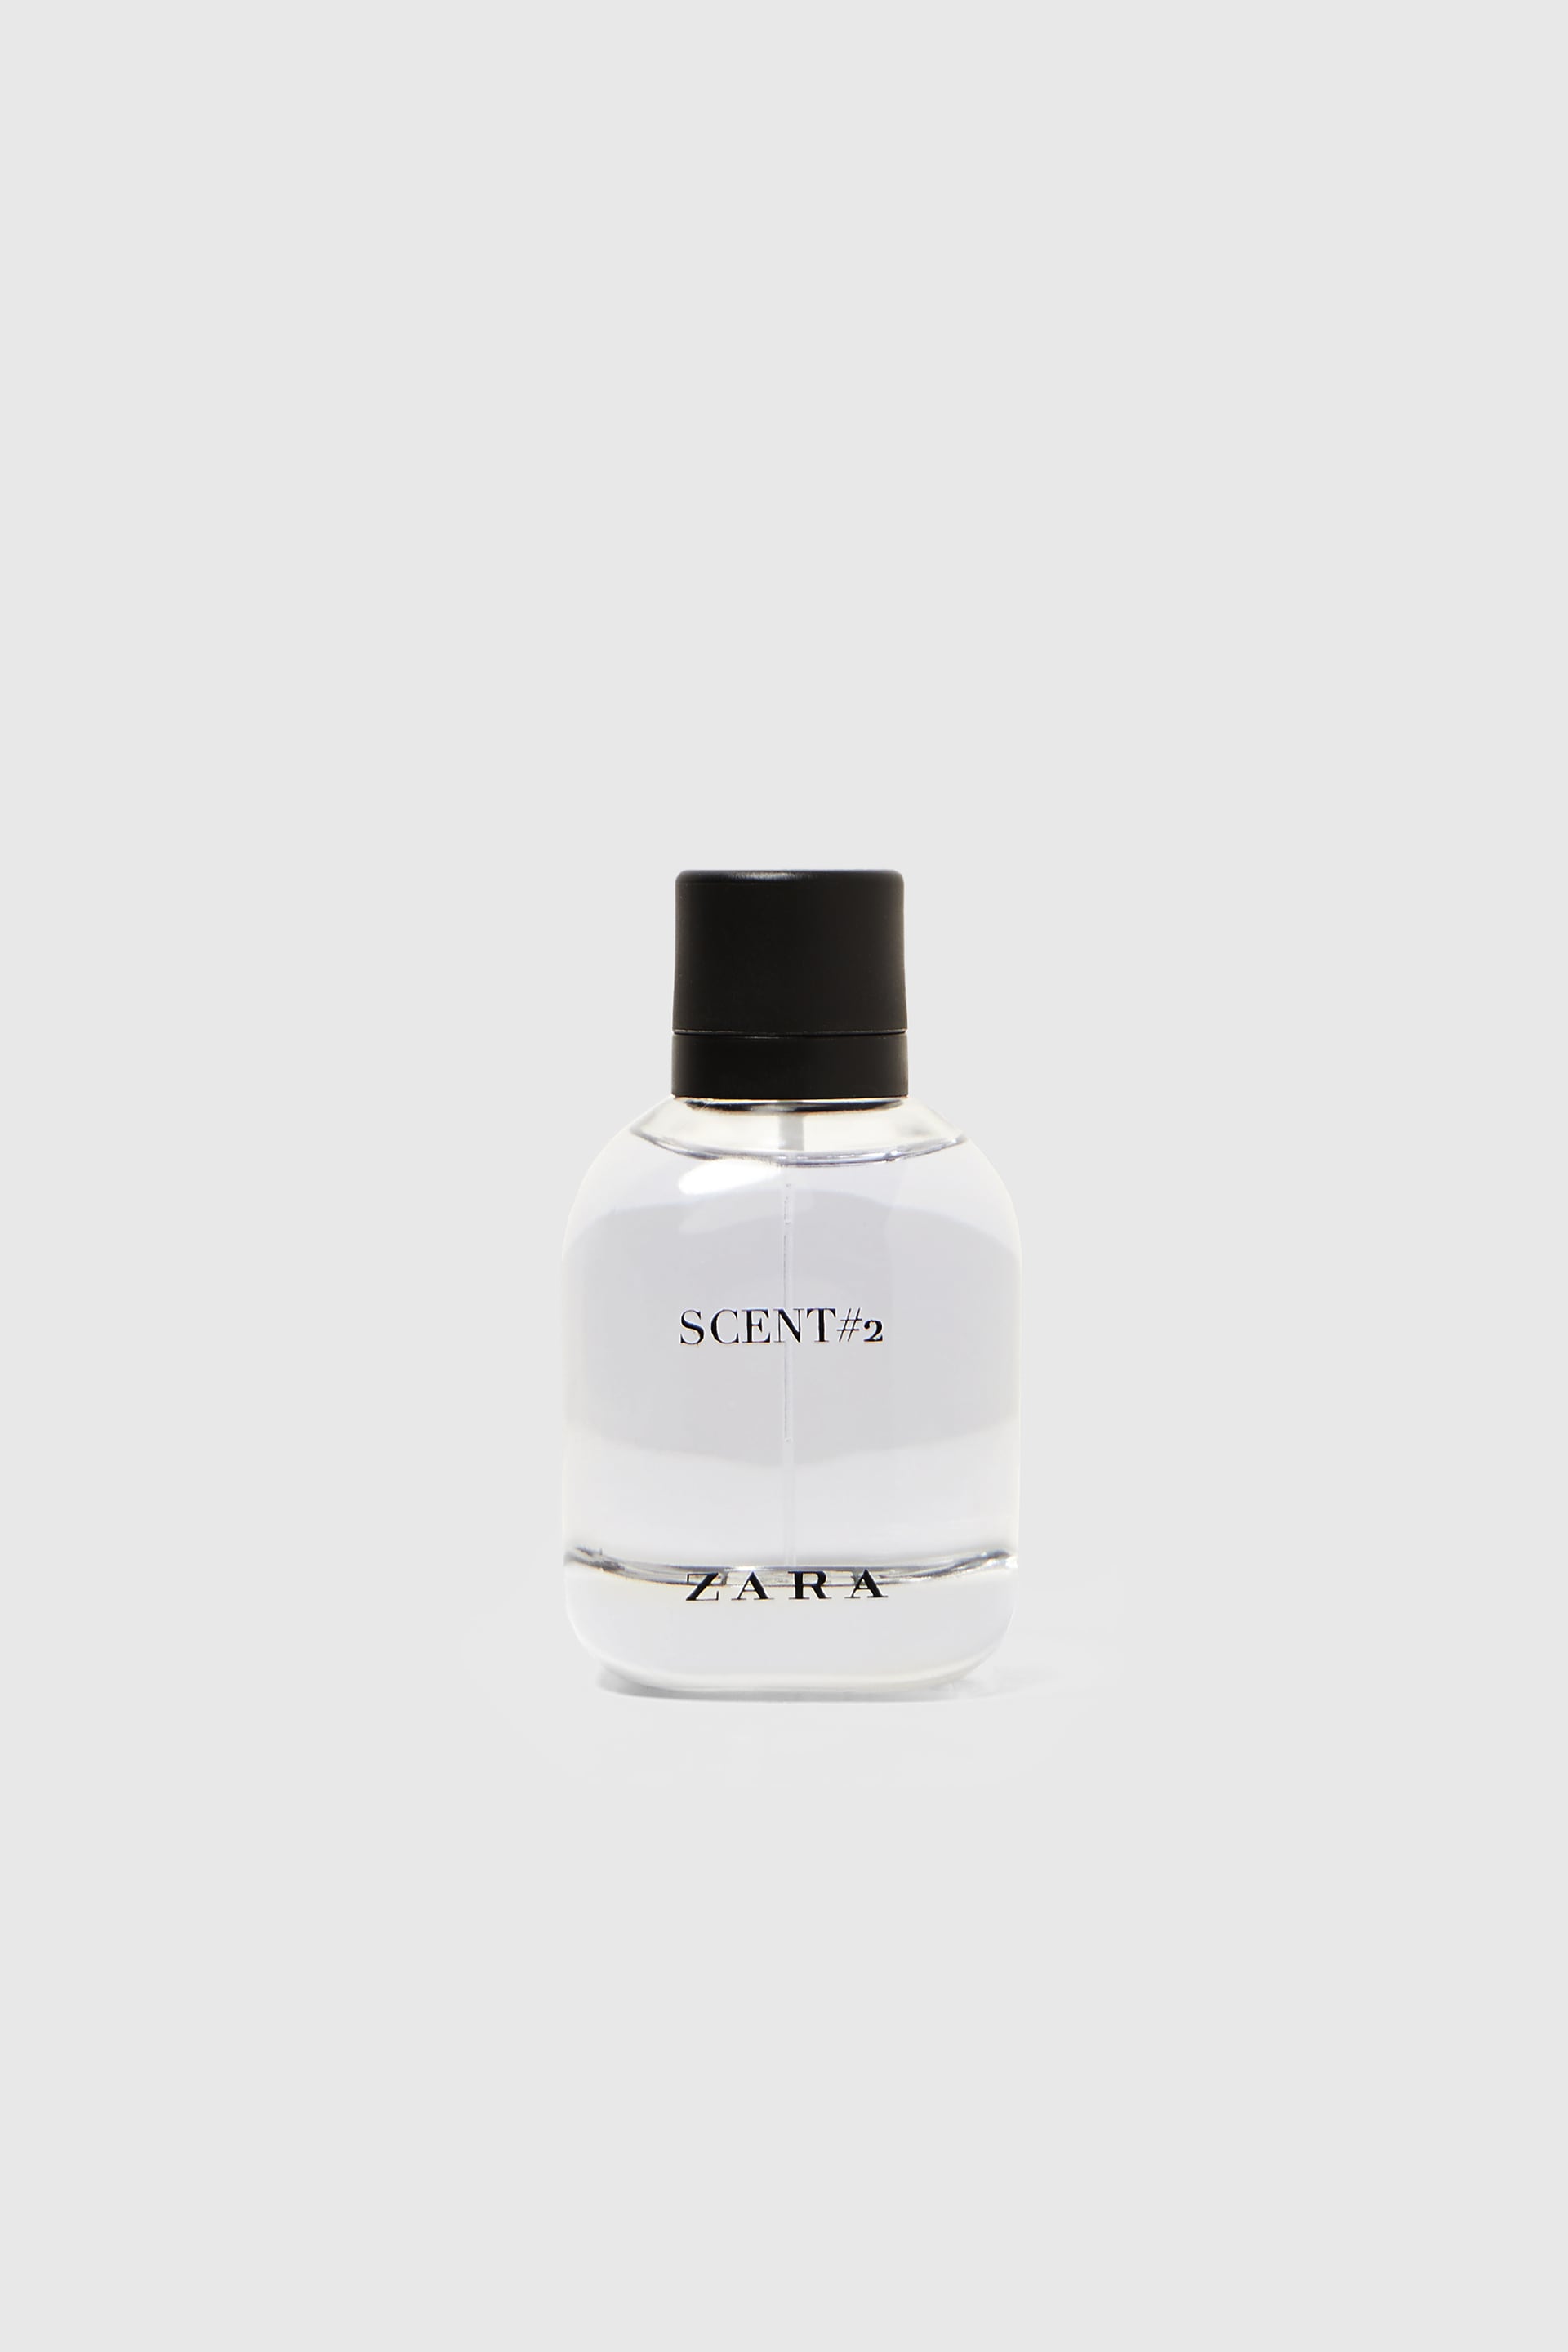 Scent #2 Zara одеколон — новый аромат 